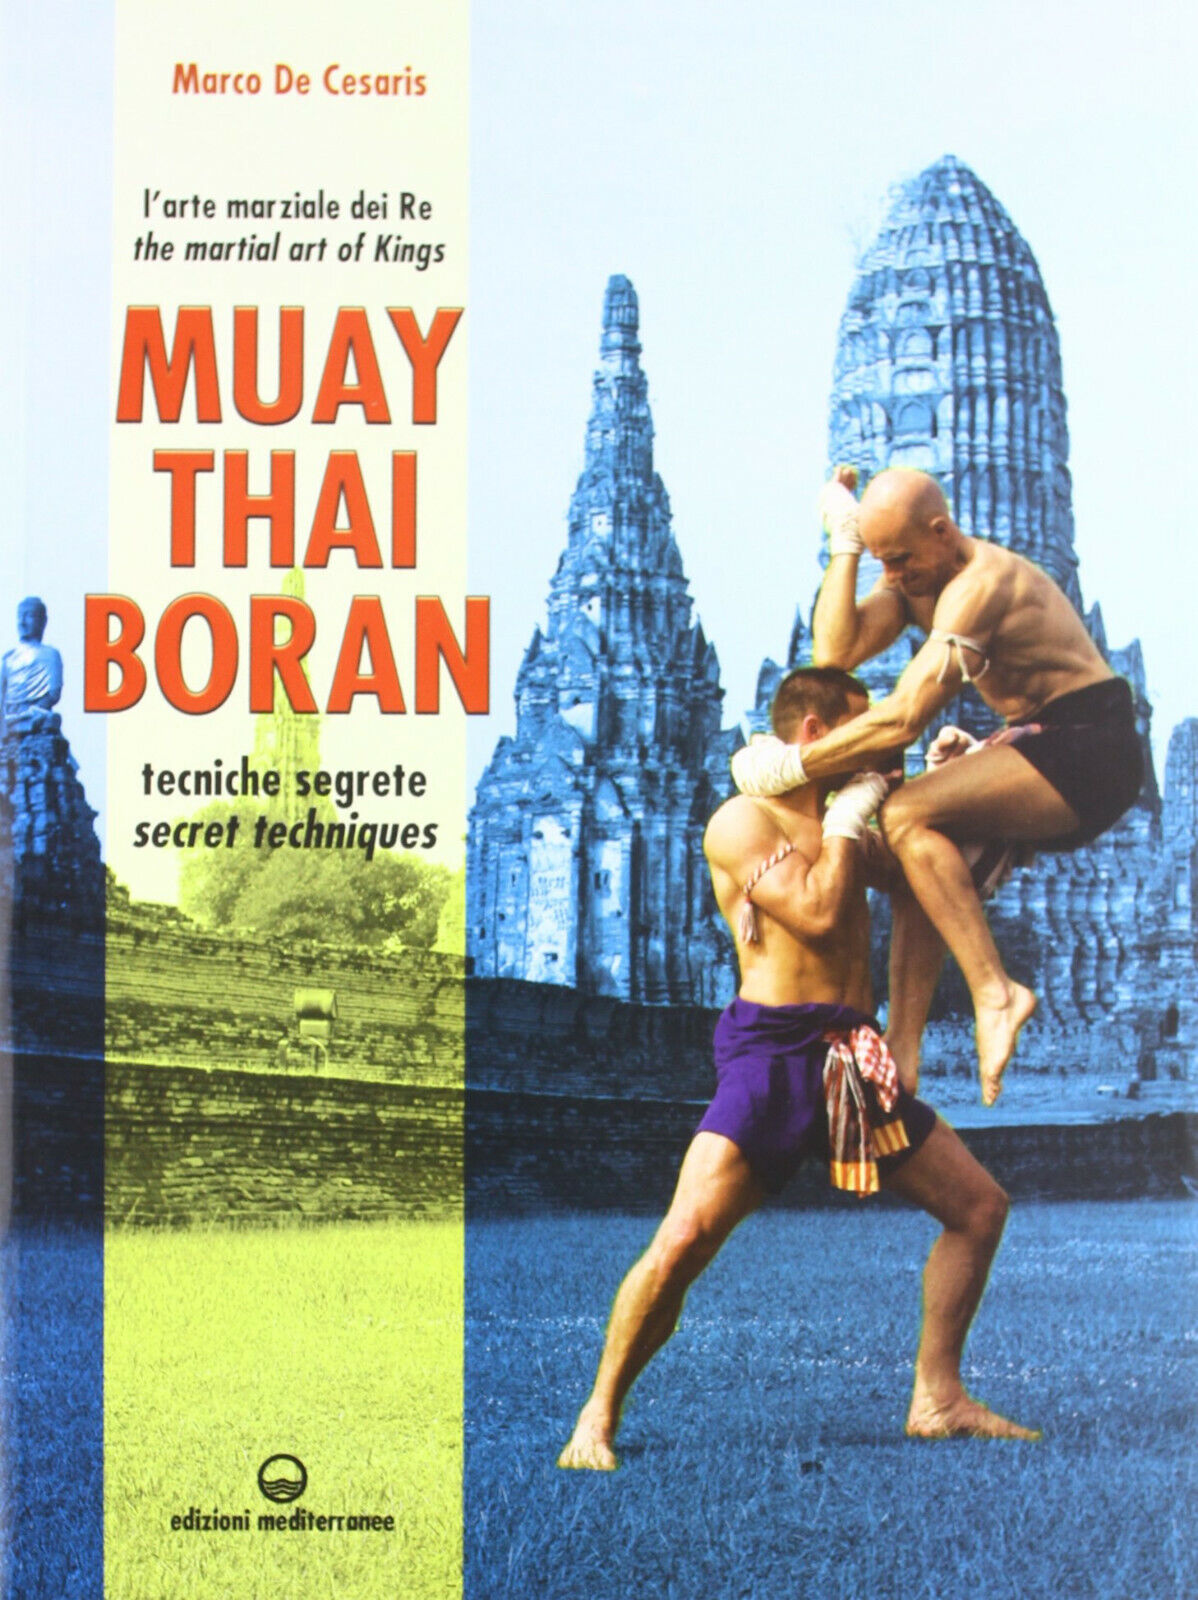 Muay Thai Boran - Marco De Cesaris - Edizioni Mediterranee, 2012